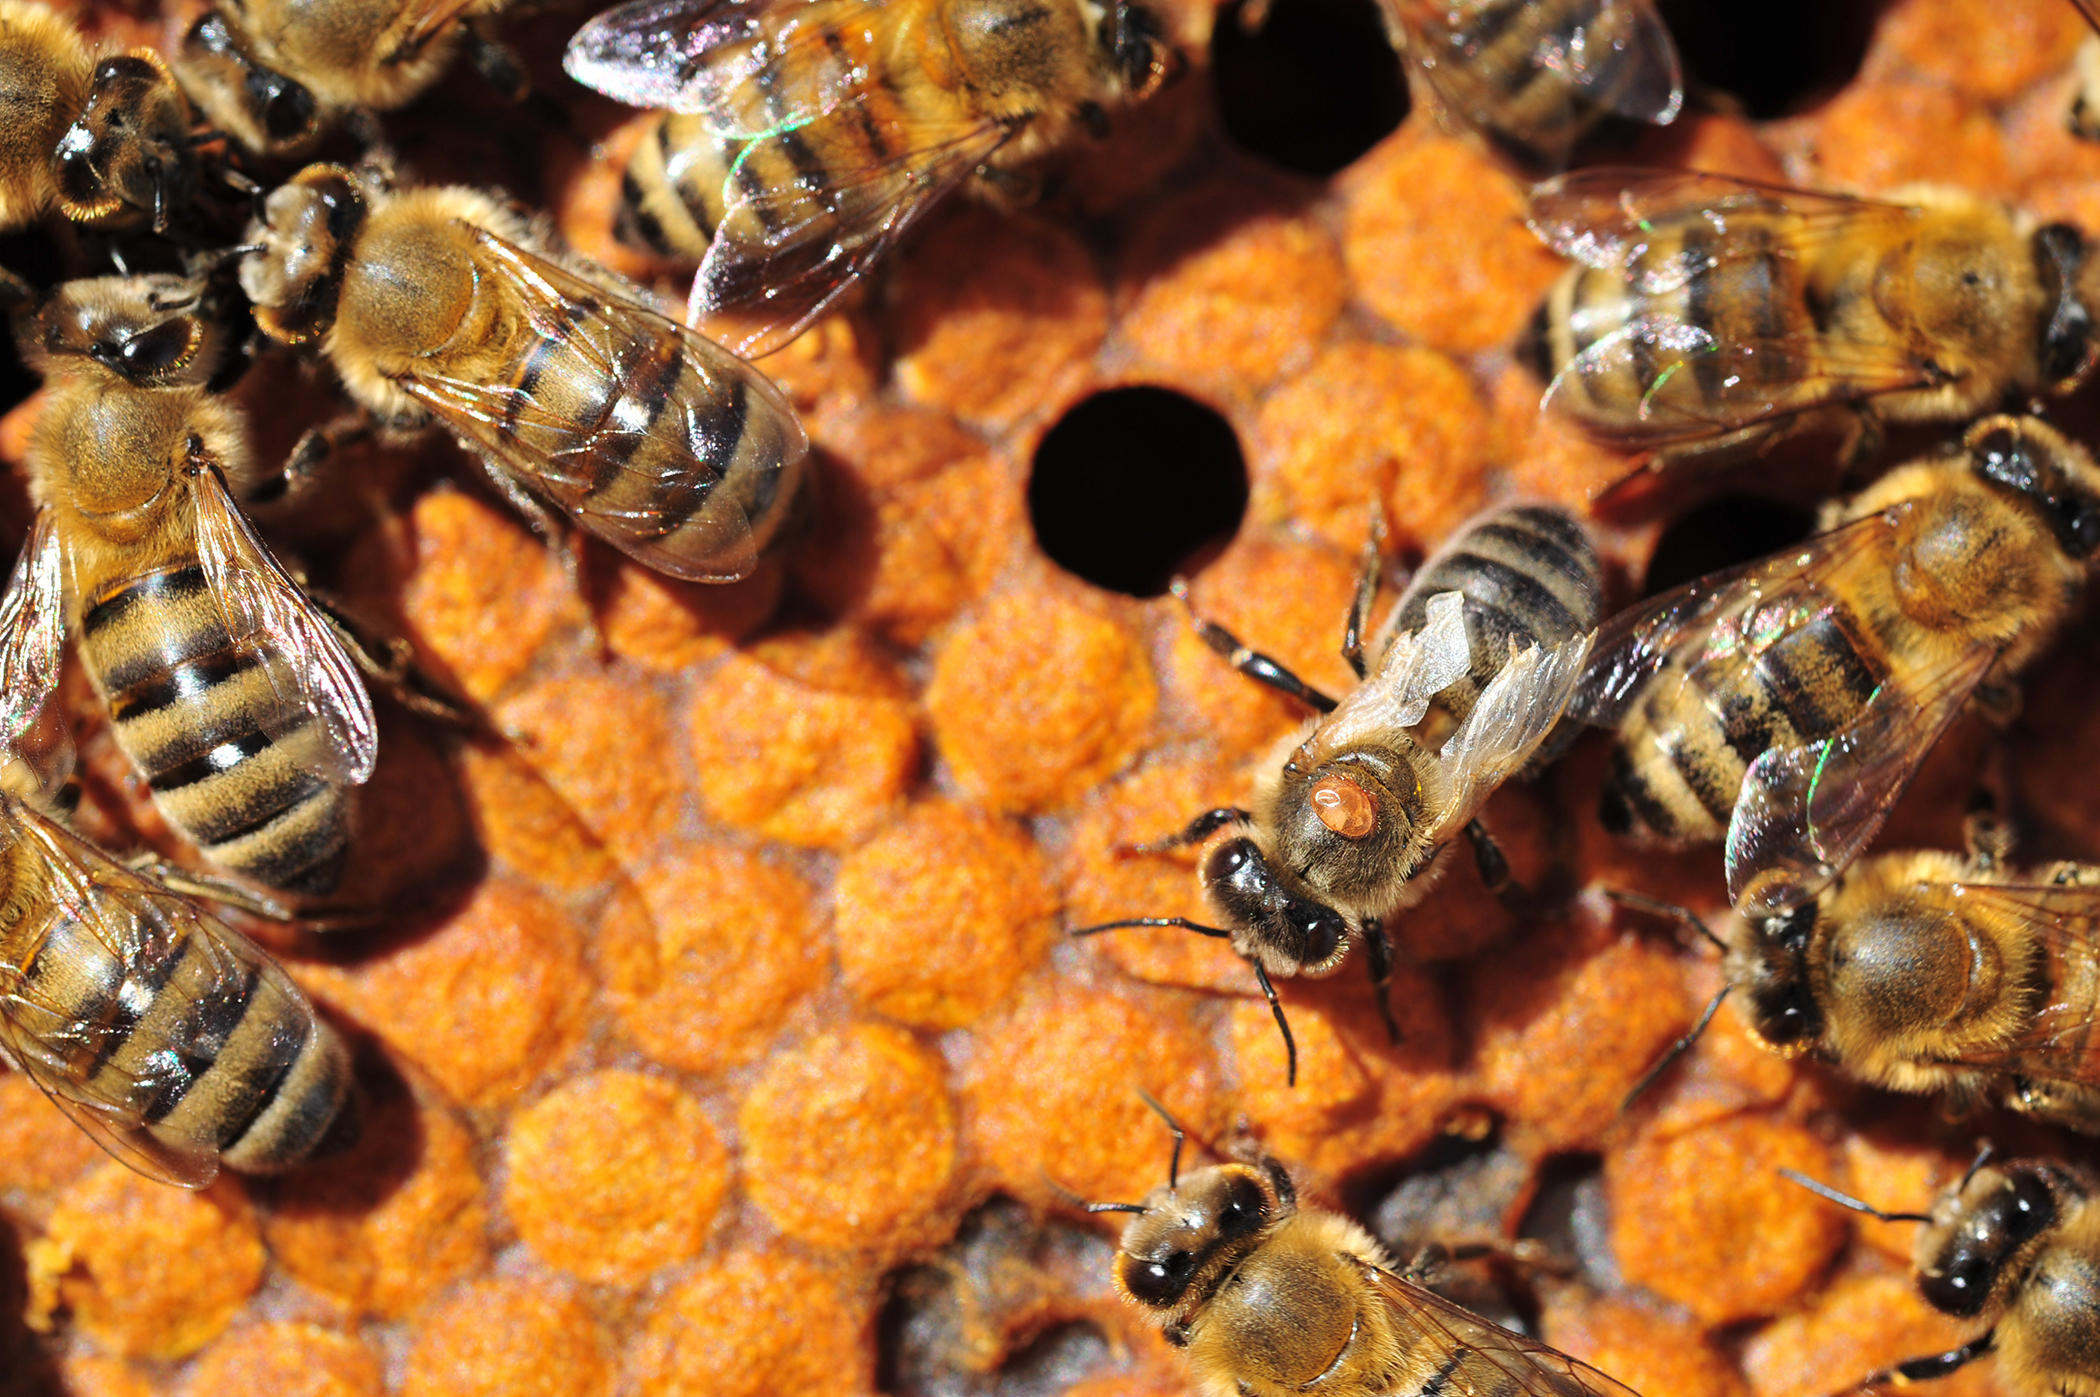 Scientists find holes in armor of major honey bee pest | Michigan Radio